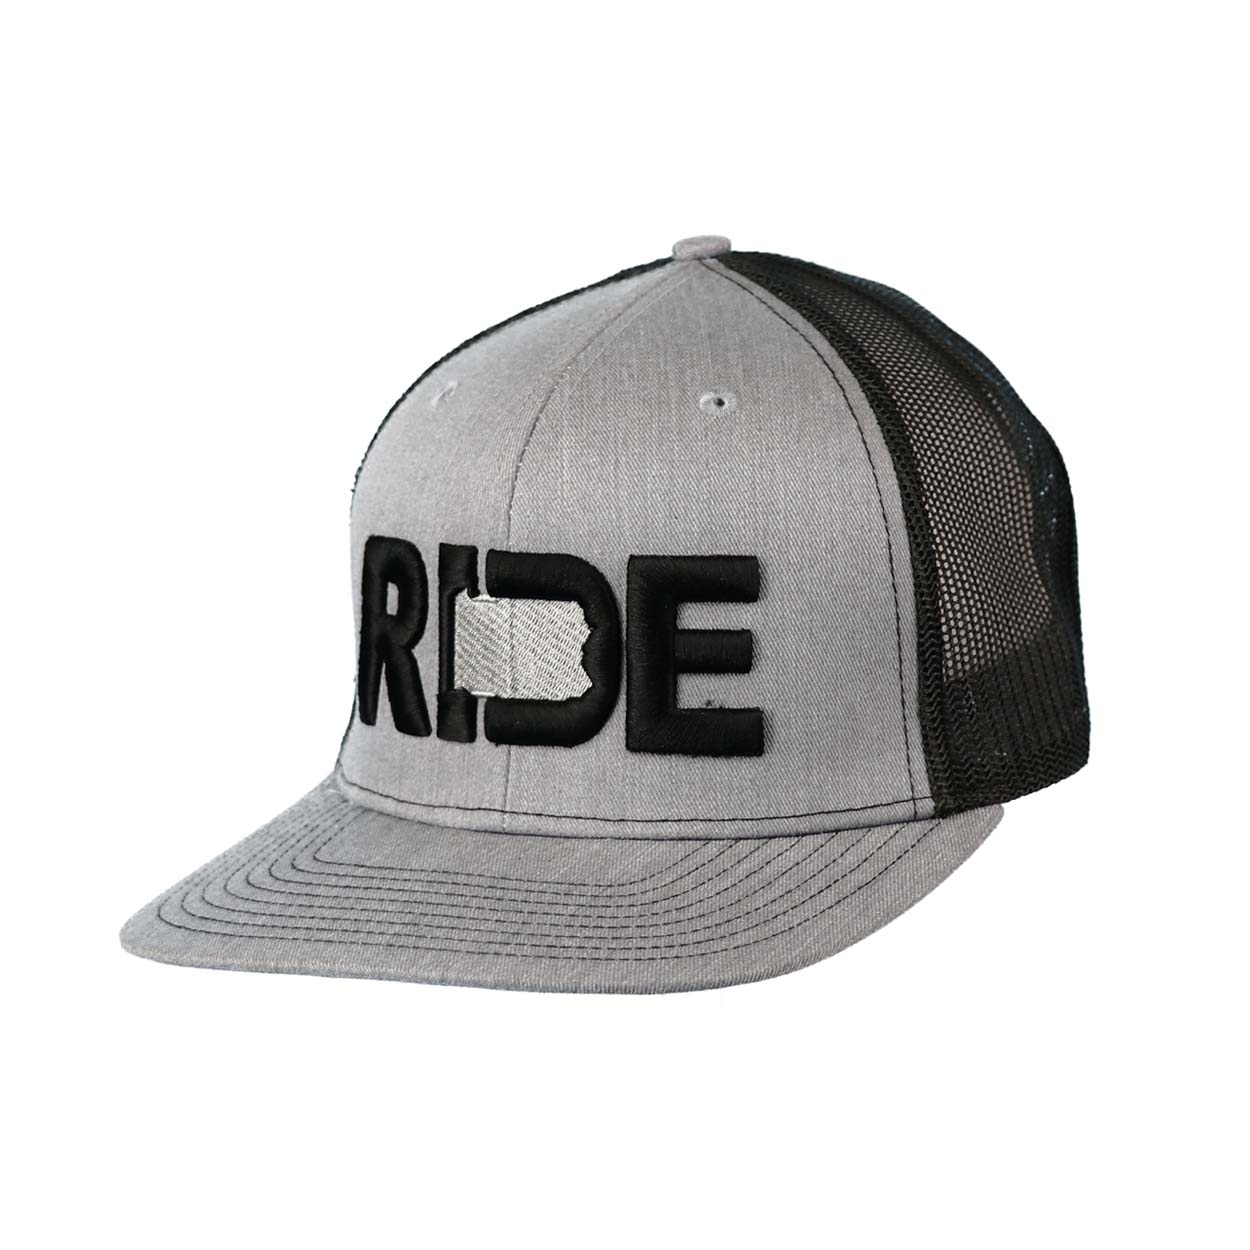 Ride Pennsylvania Classic Pro 3D Puff Embroidered Snapback Trucker Hat Heather Gray/Black